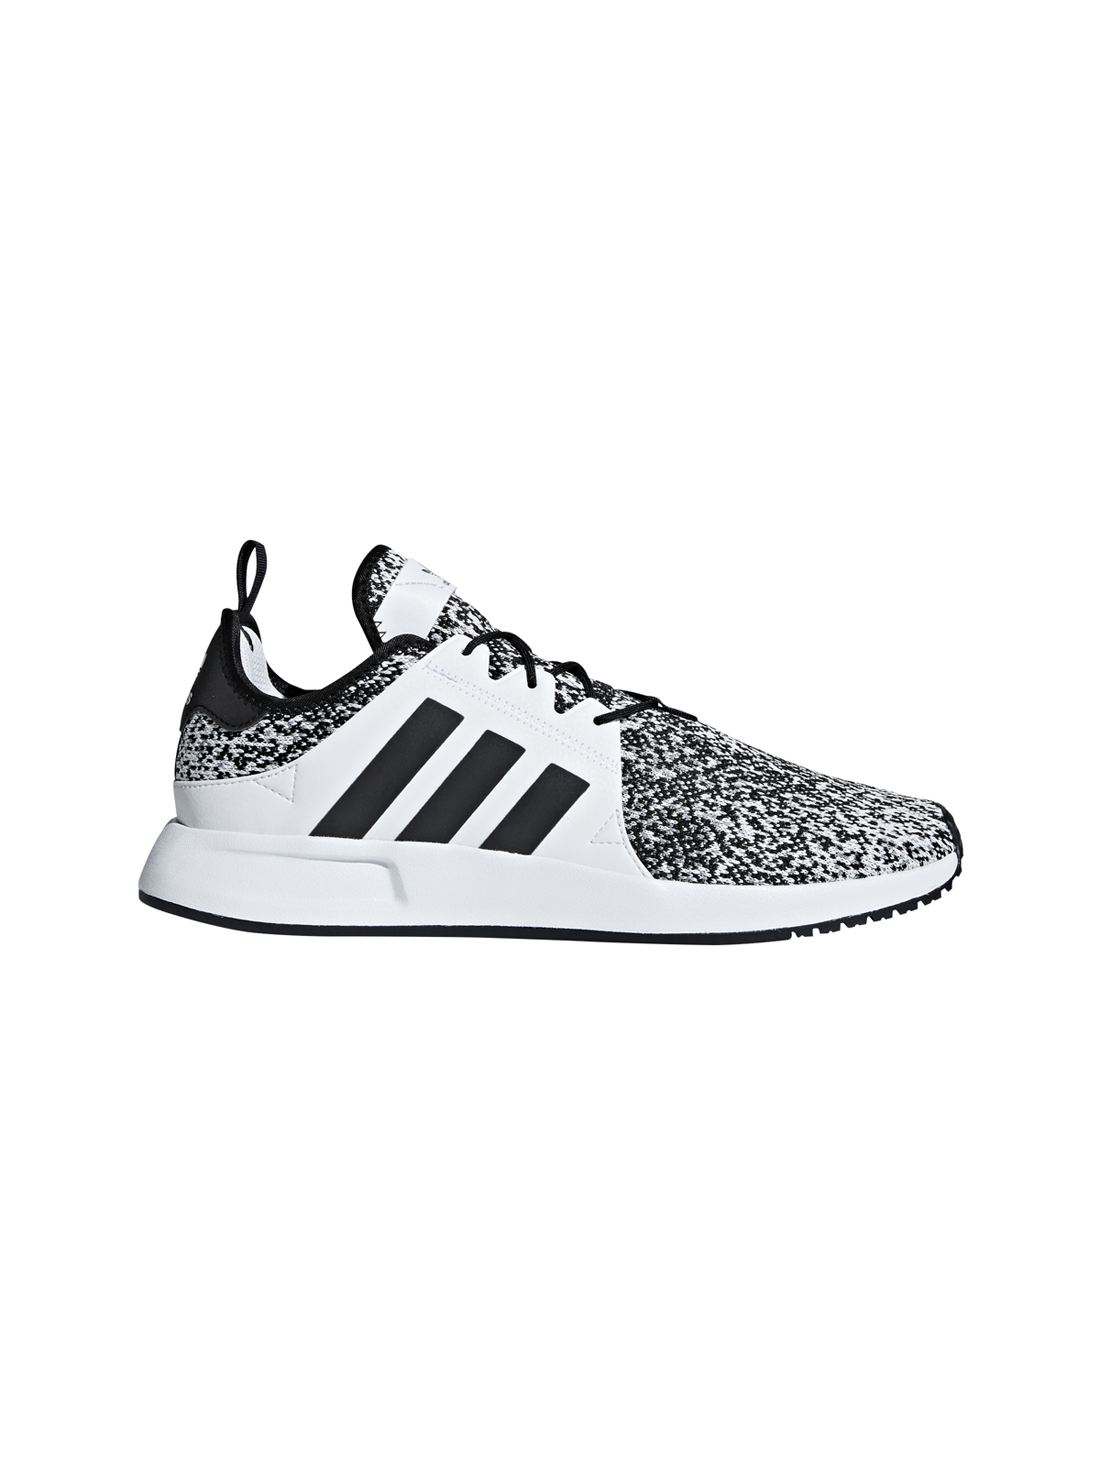 Adidas X_PLR - White / Black / Grey 